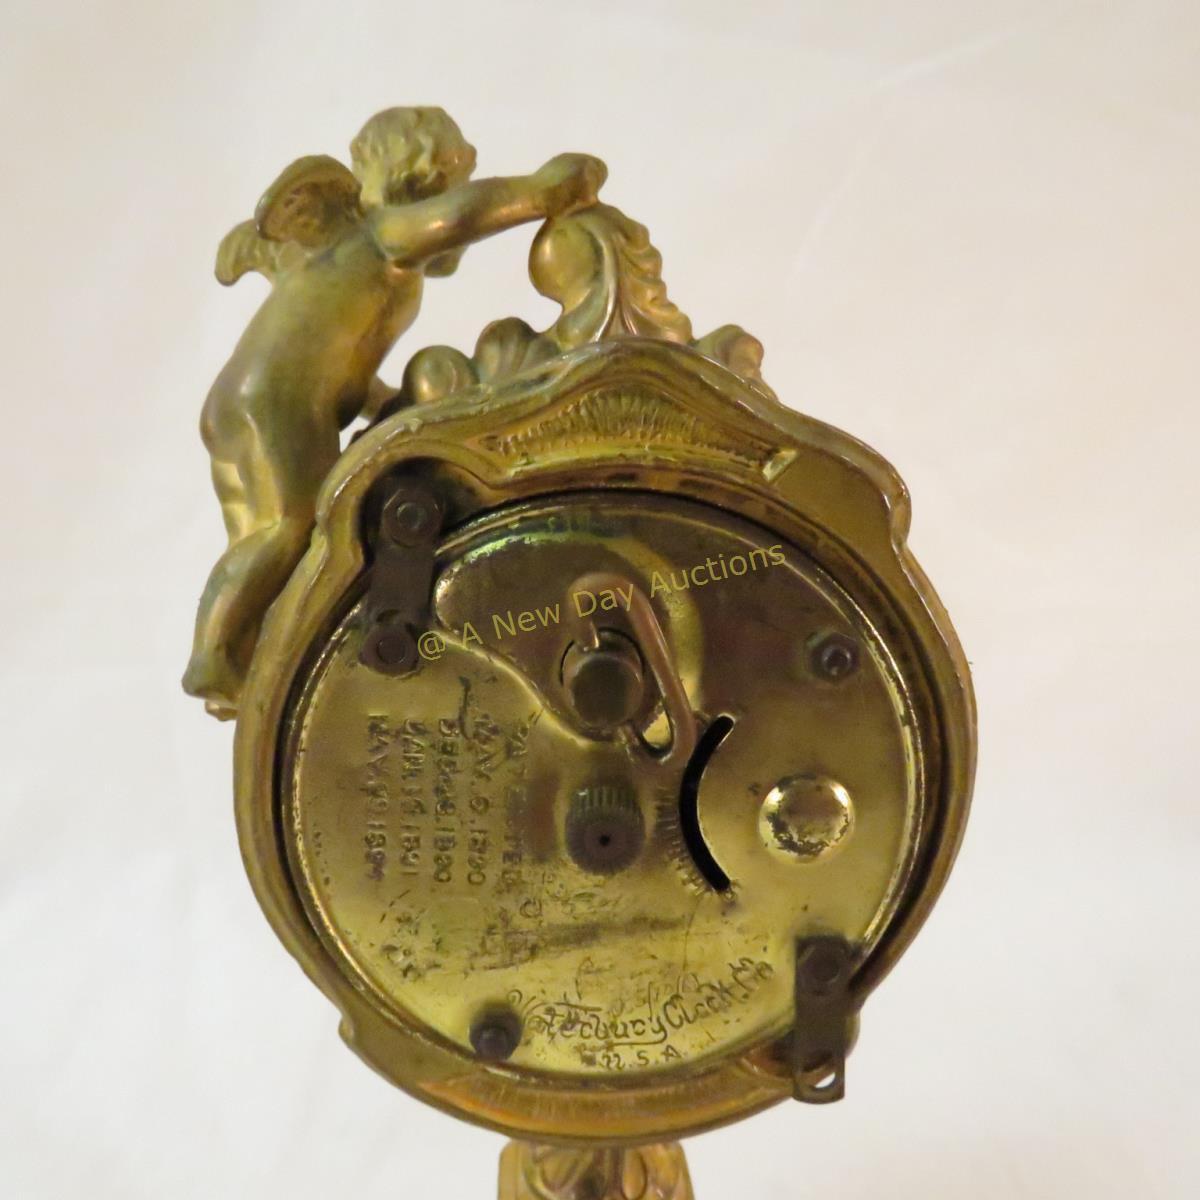 Antique Waterbury Cherub Table Clock